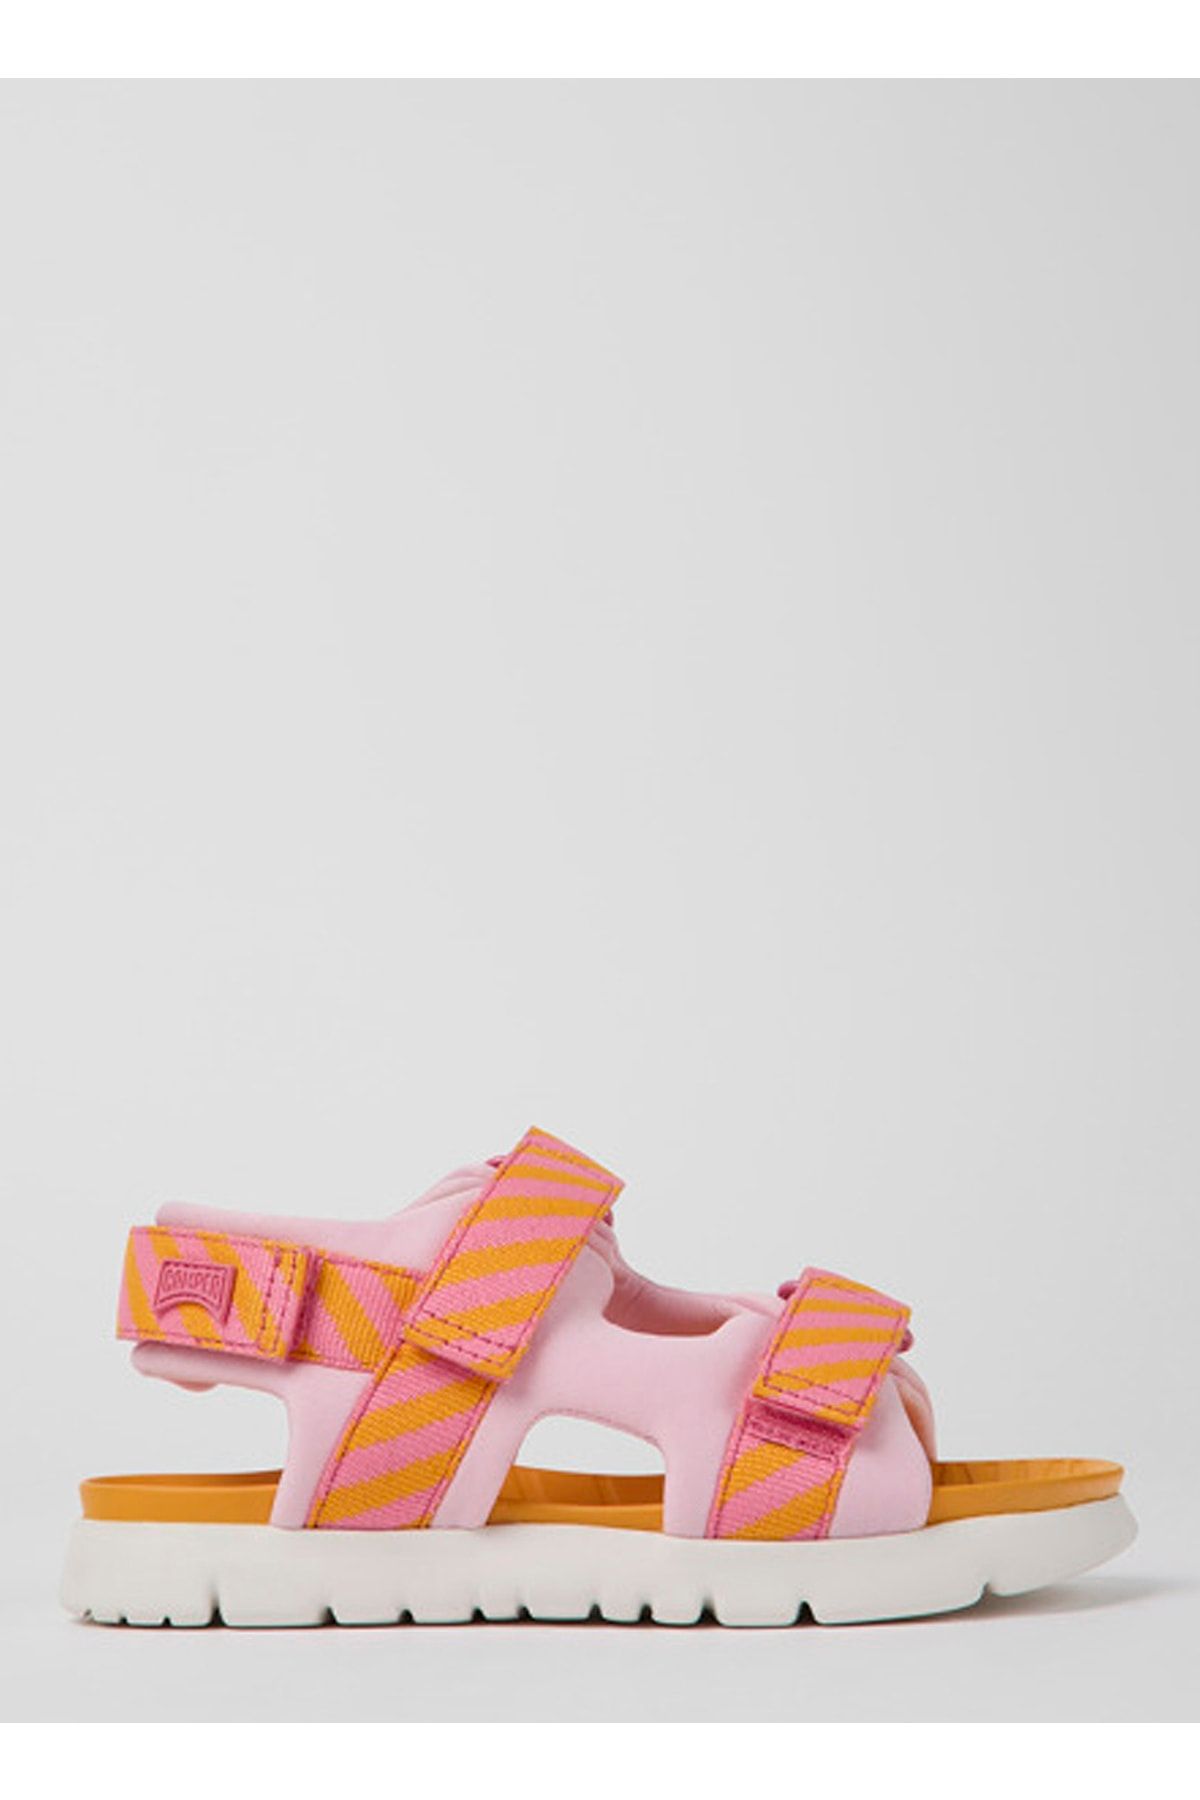 CAMPER Çok Renkli Kız Çocuk Sandalet K800532-002-3 Oruga Sandal Kids